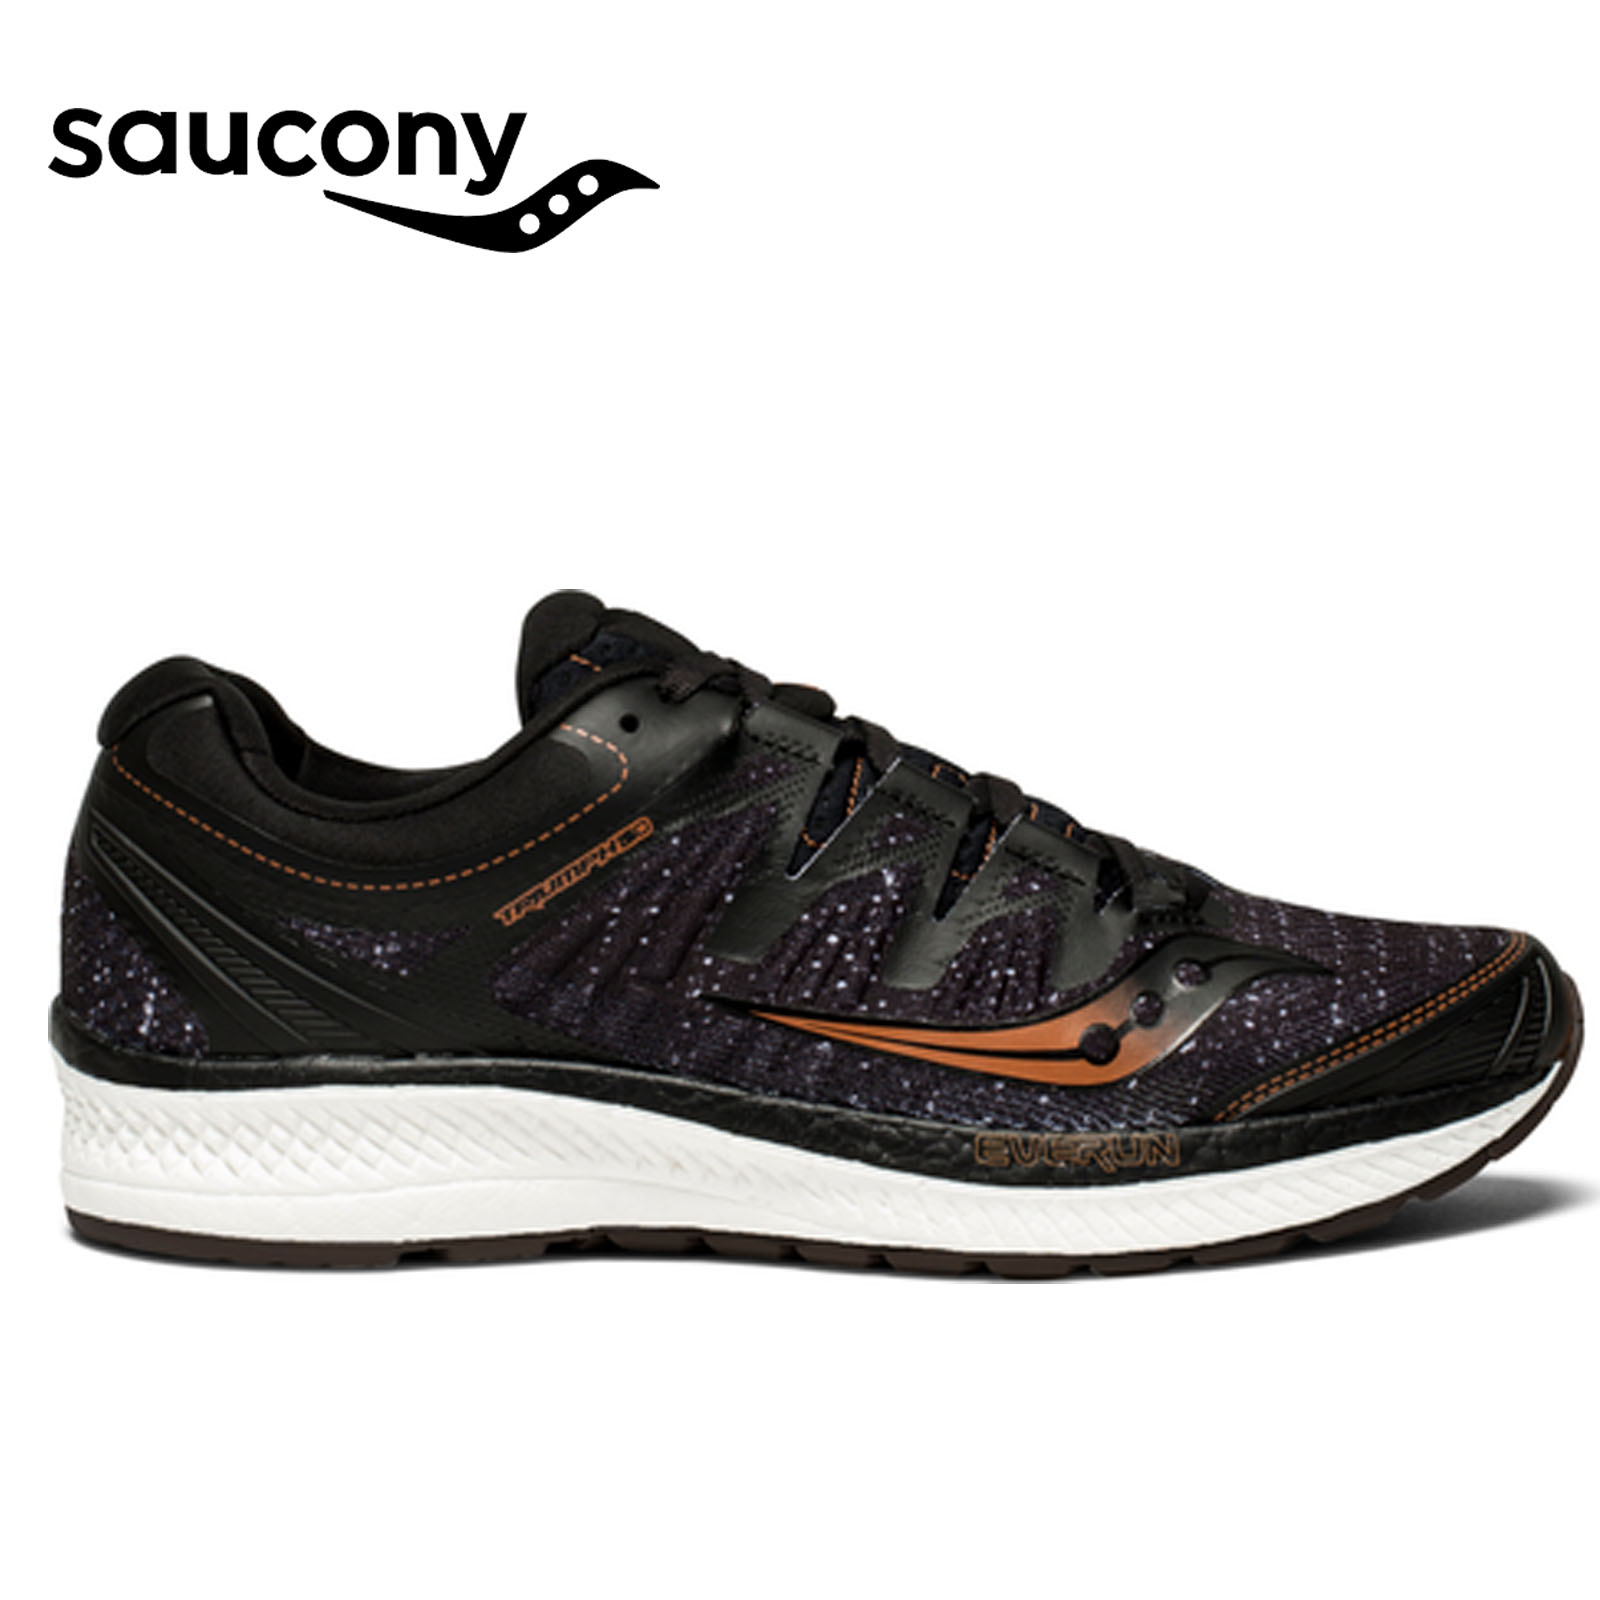 Saucony Women's Triumph ISO 4 Sneakers 